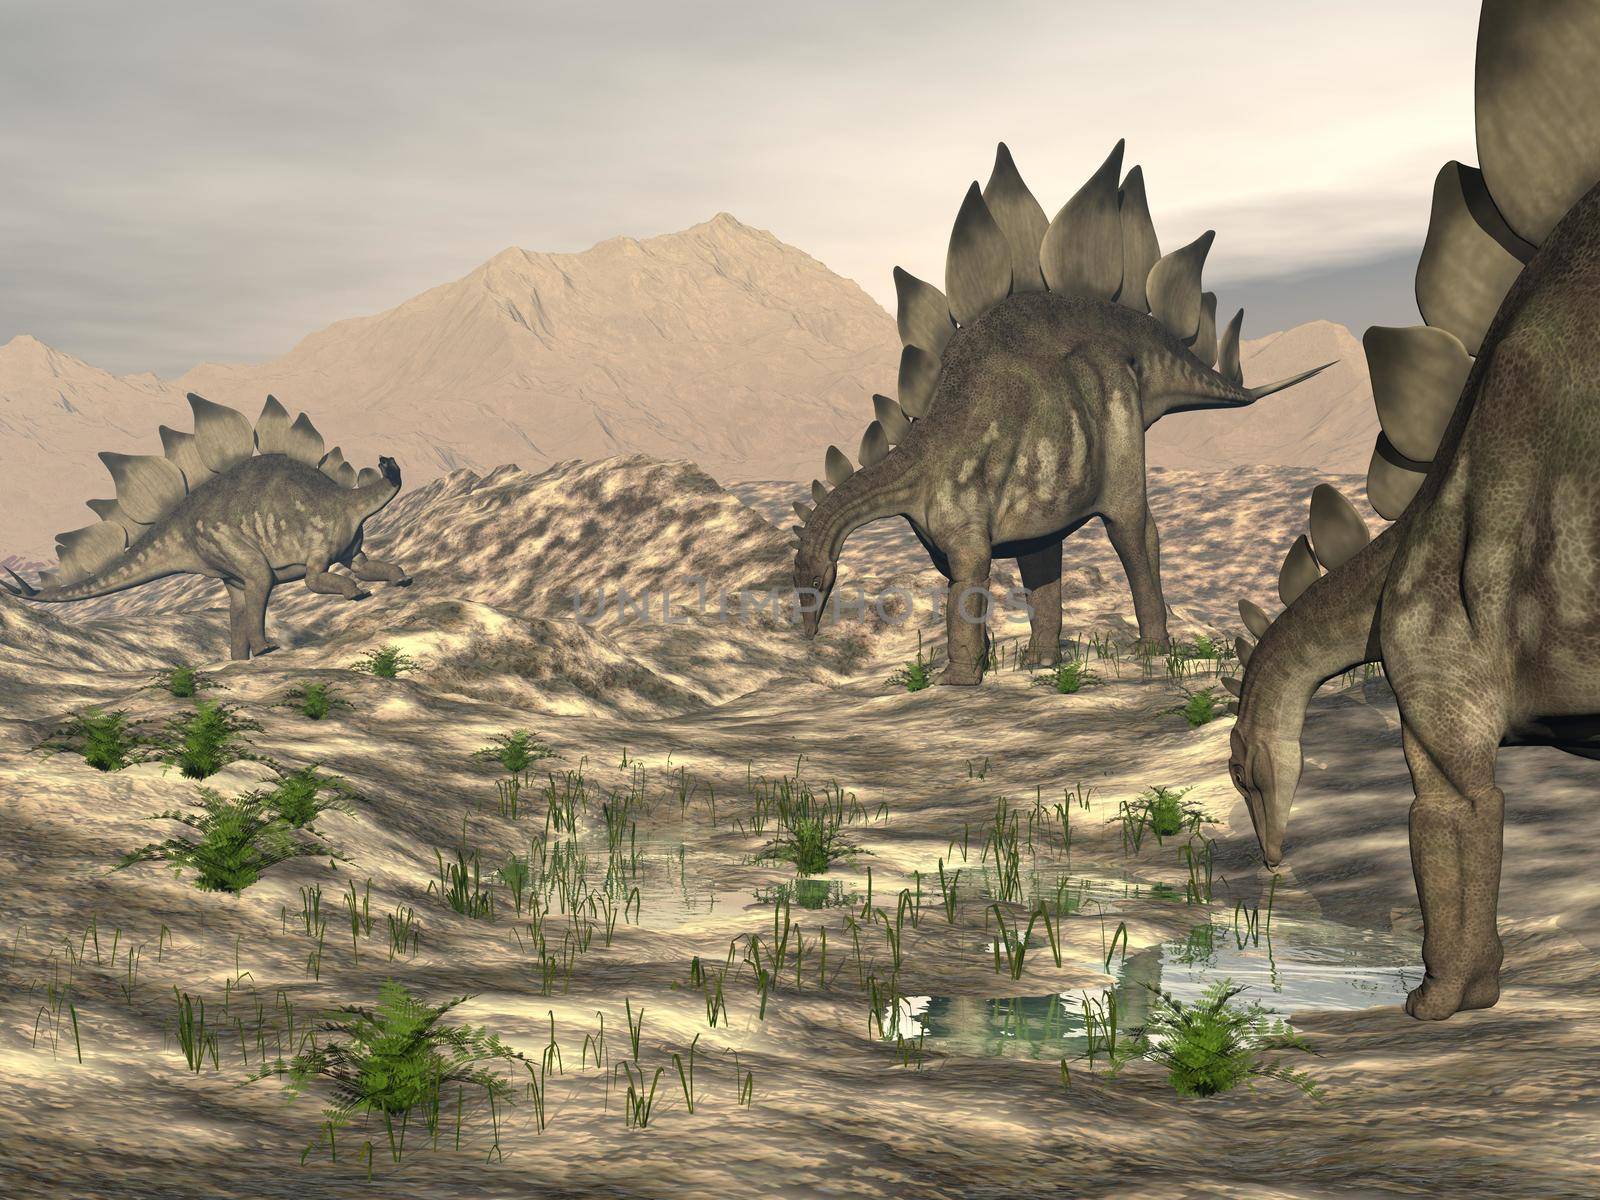 Stegosaurus near water - 3D render by Elenaphotos21